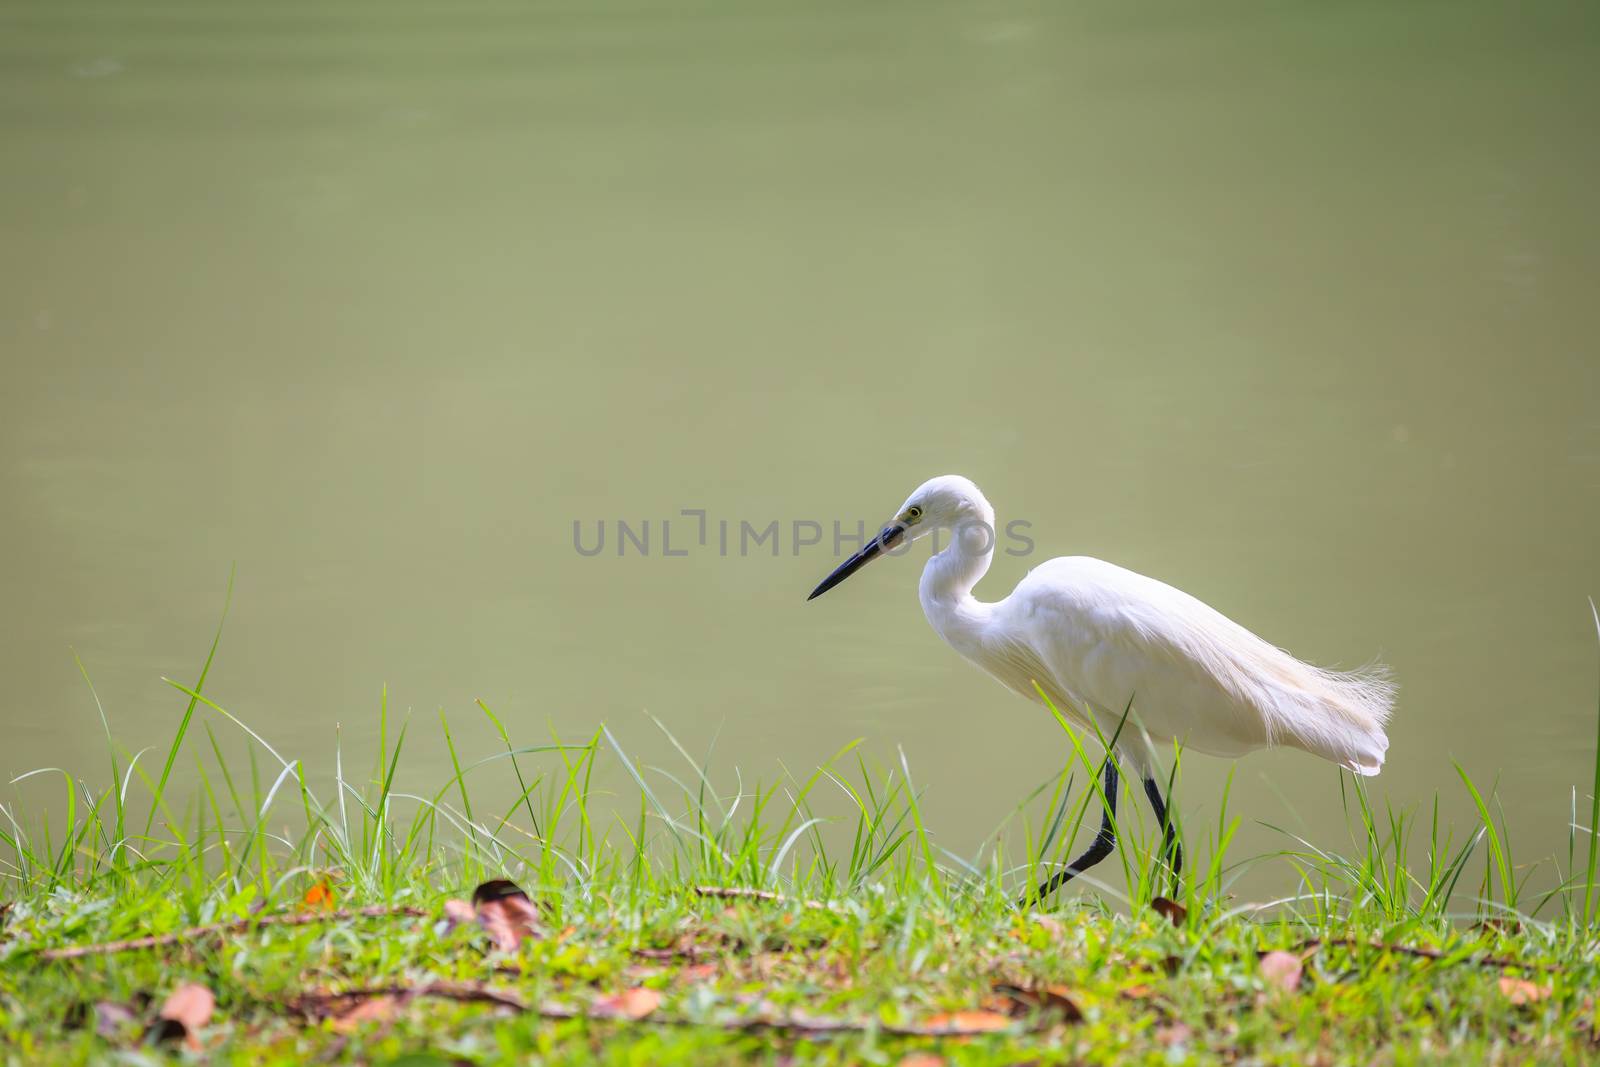 Animals in Wildlife - White Egrets. Outdoors. by kdshutterman